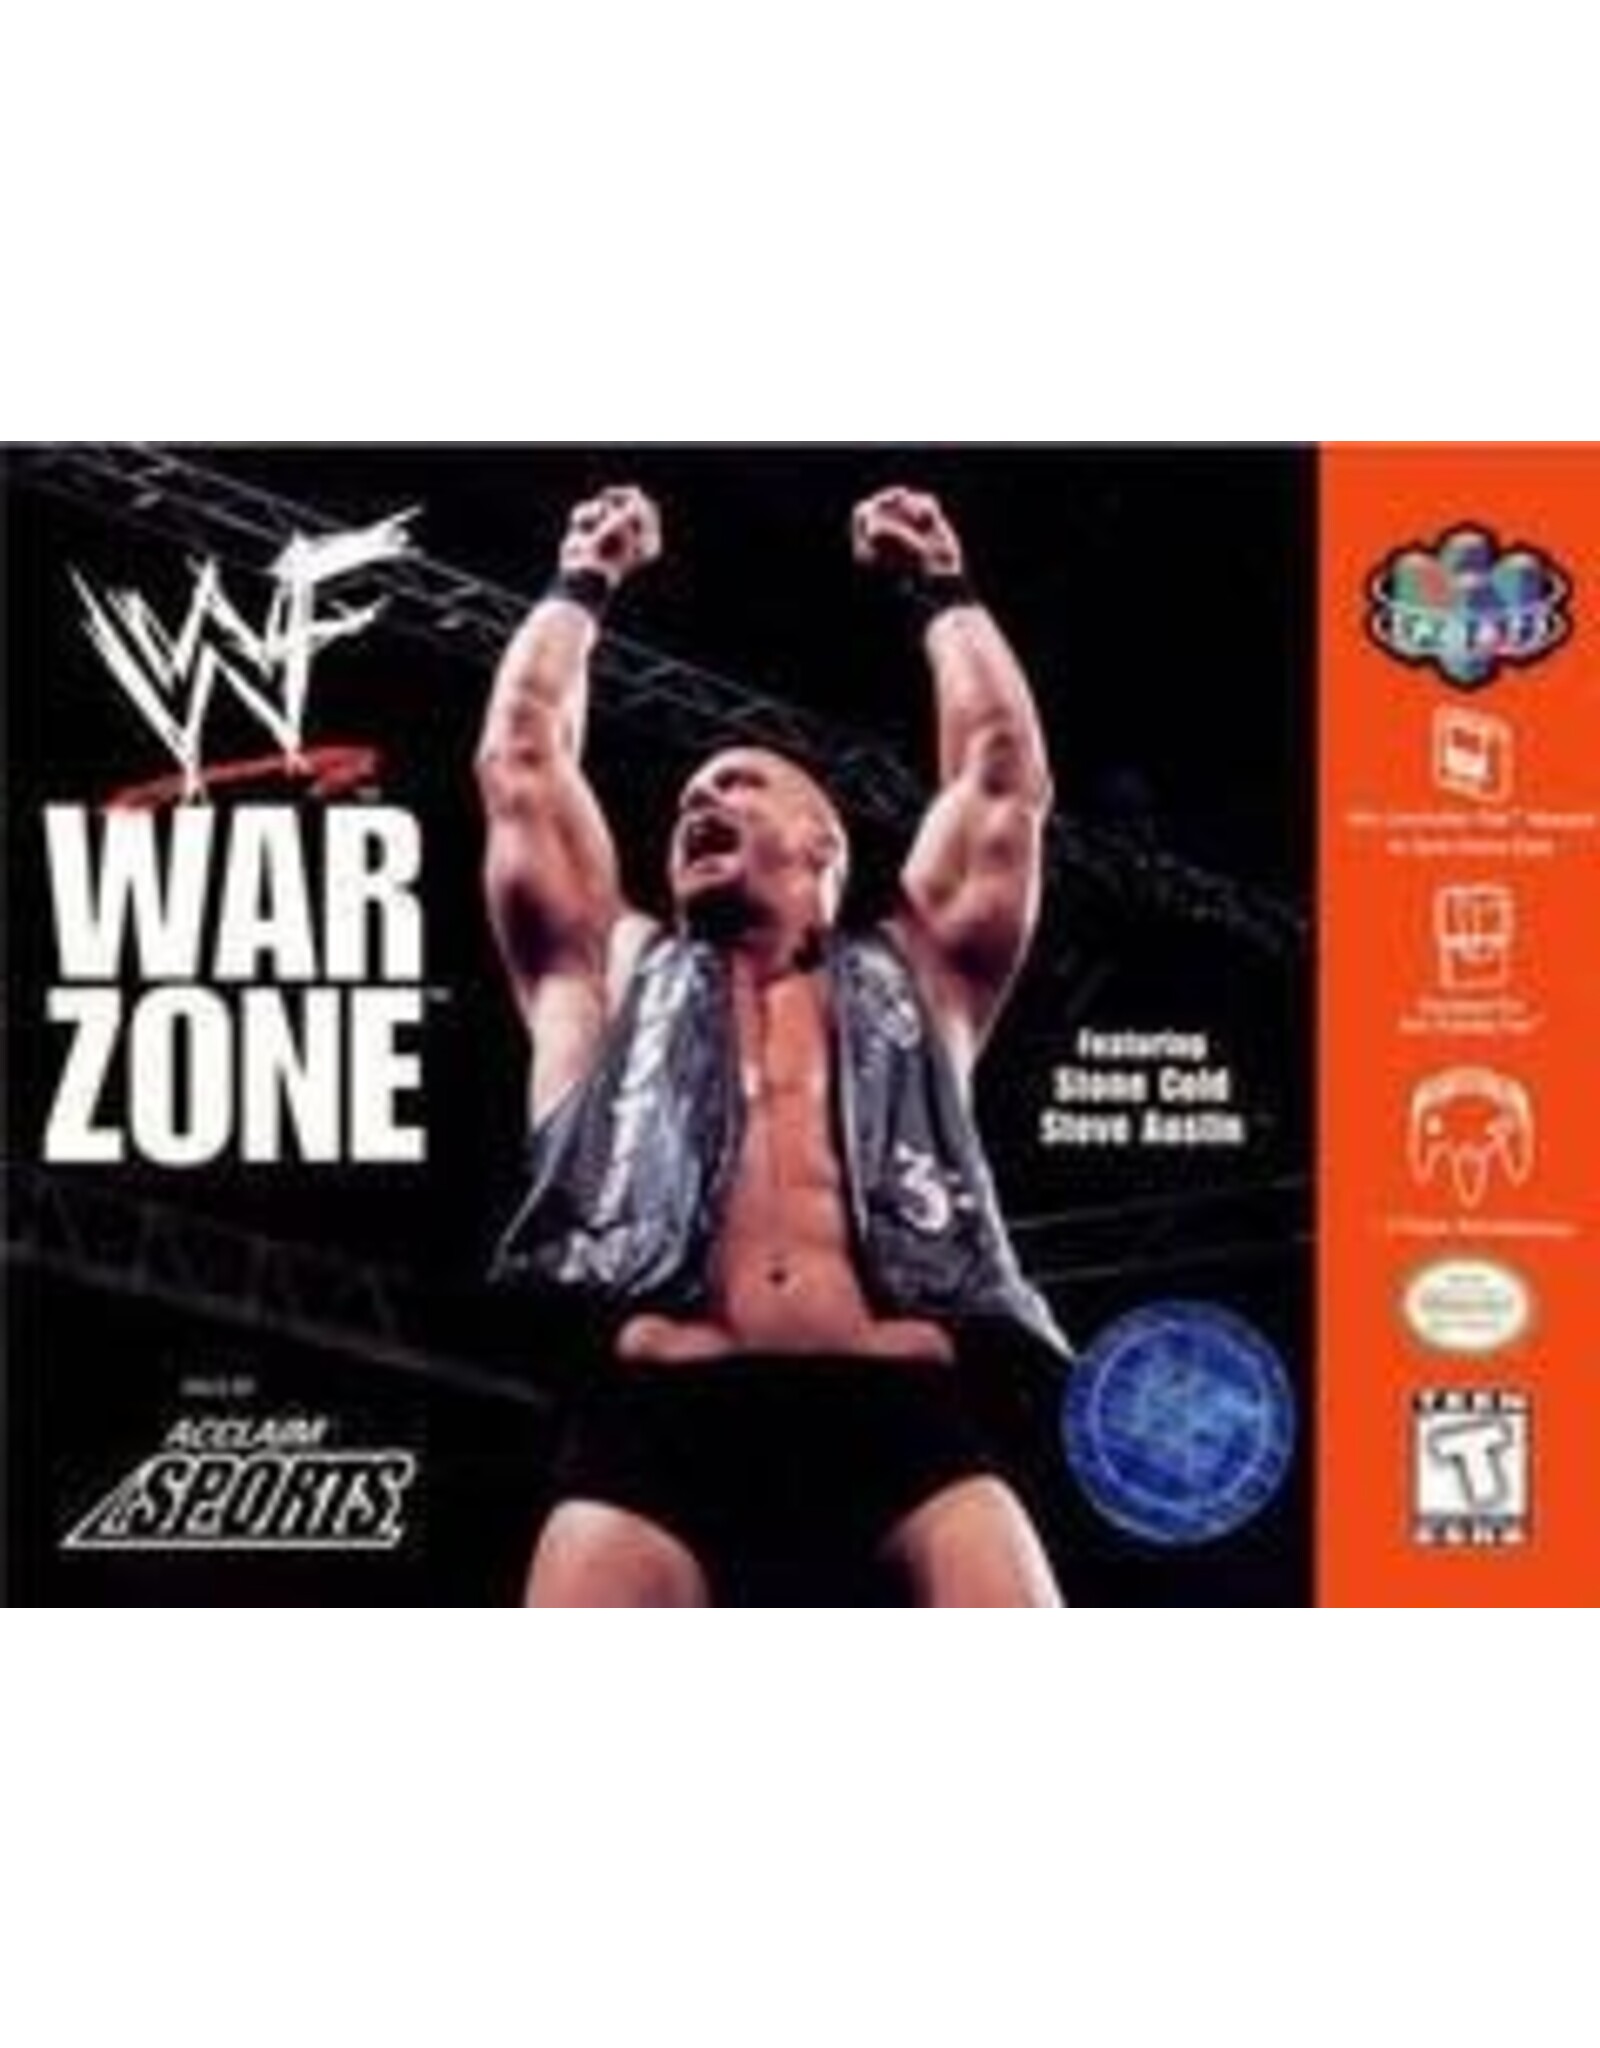 Nintendo 64 WWF War Zone (Cart Only, Damaged Label)